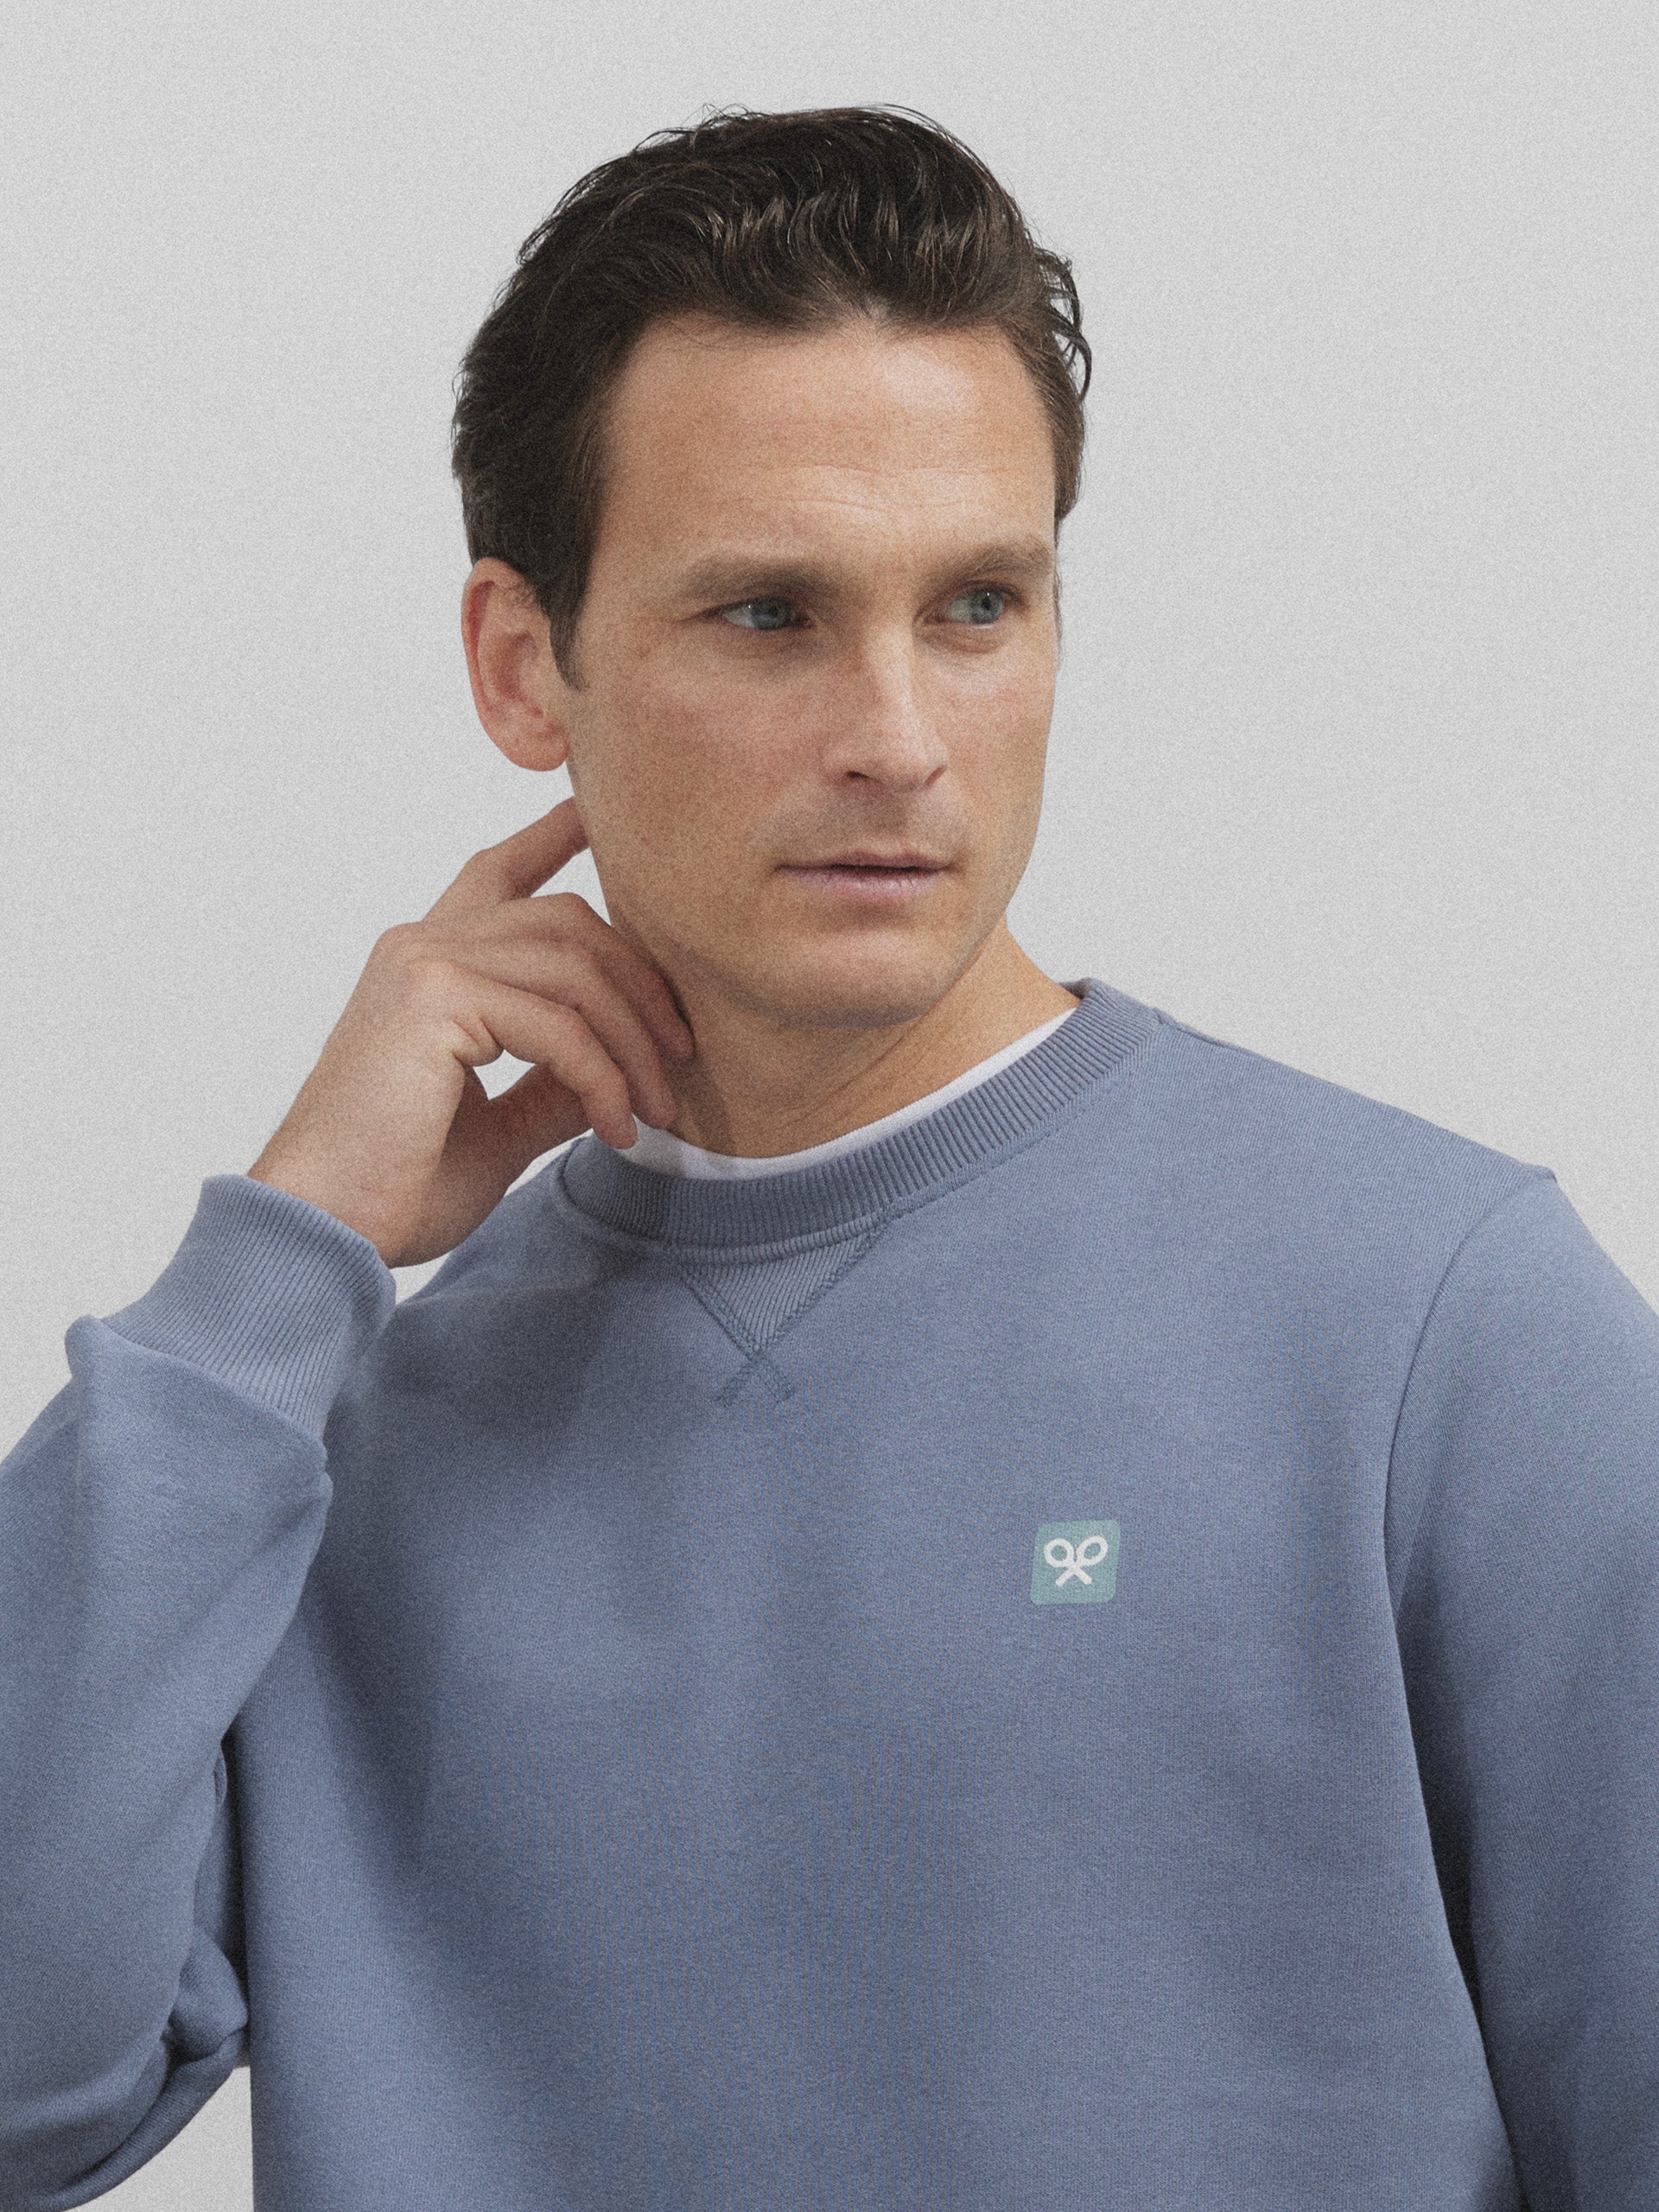 Blue racket check sweatshirt